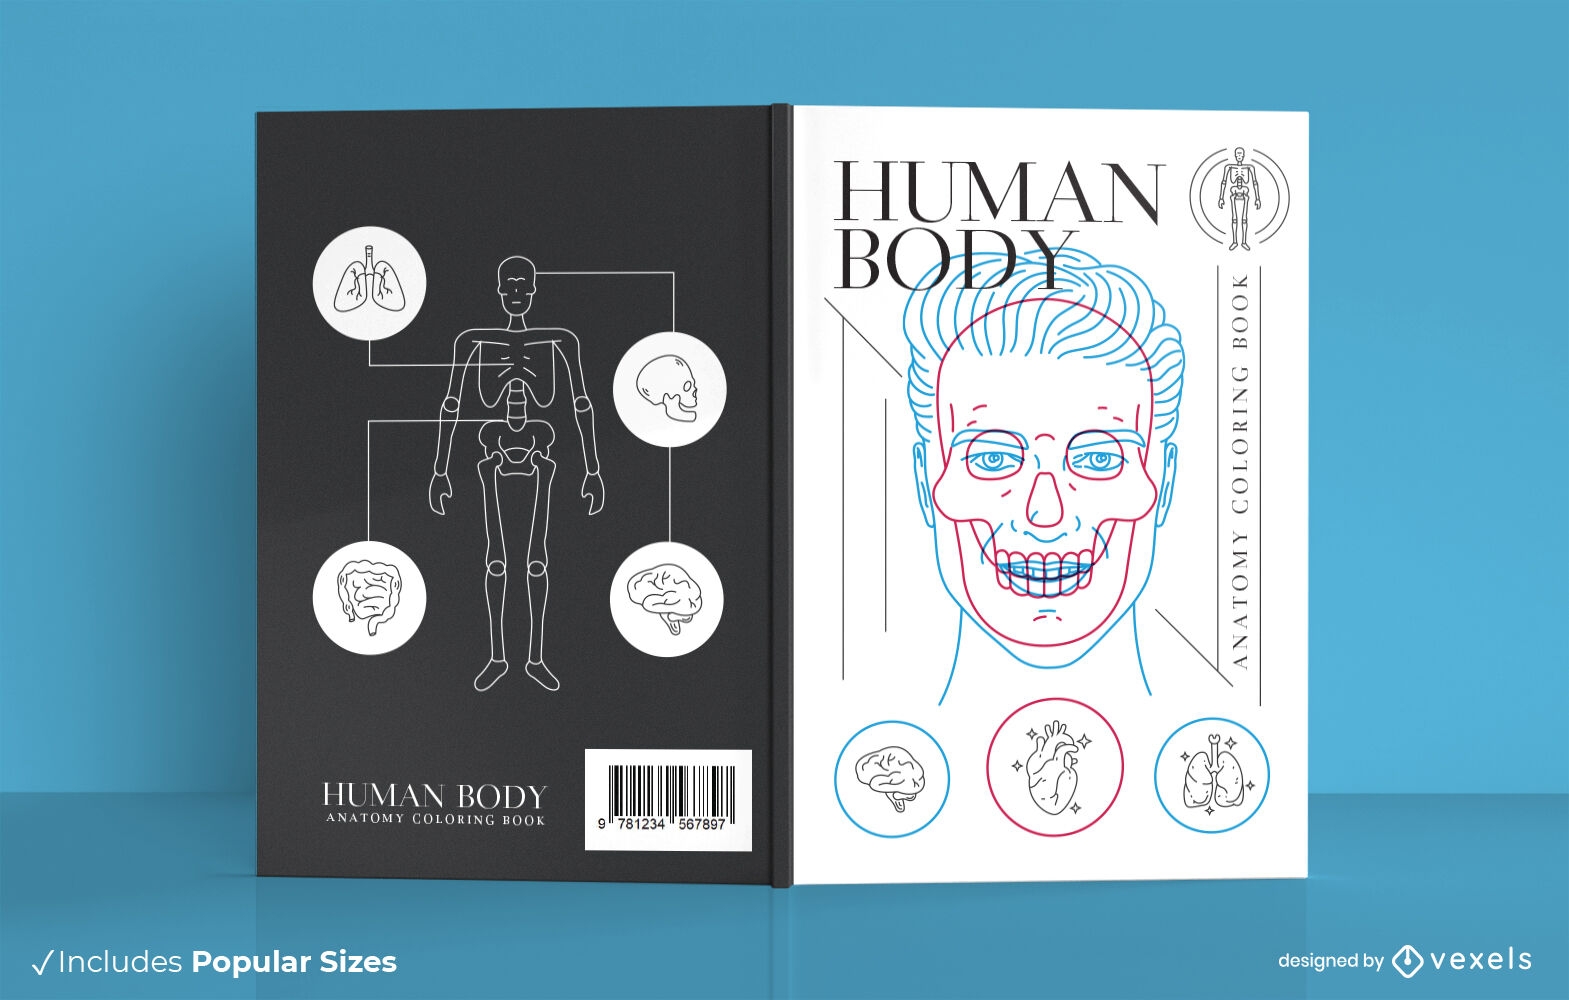 Human body book cover design